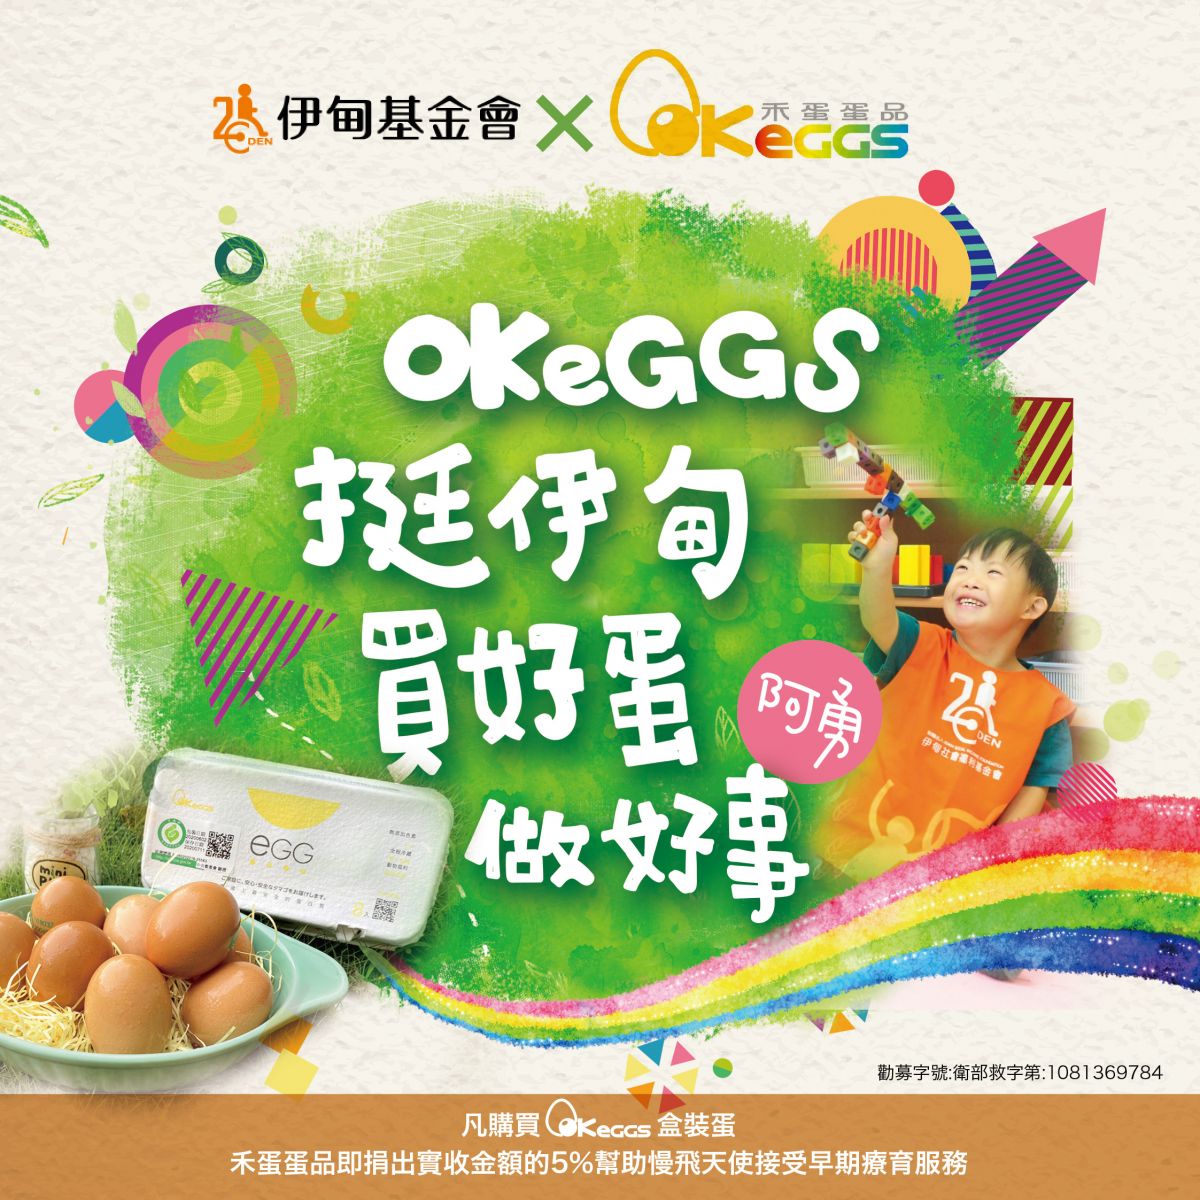 OKEGGS邀您一起买好蛋 做好事